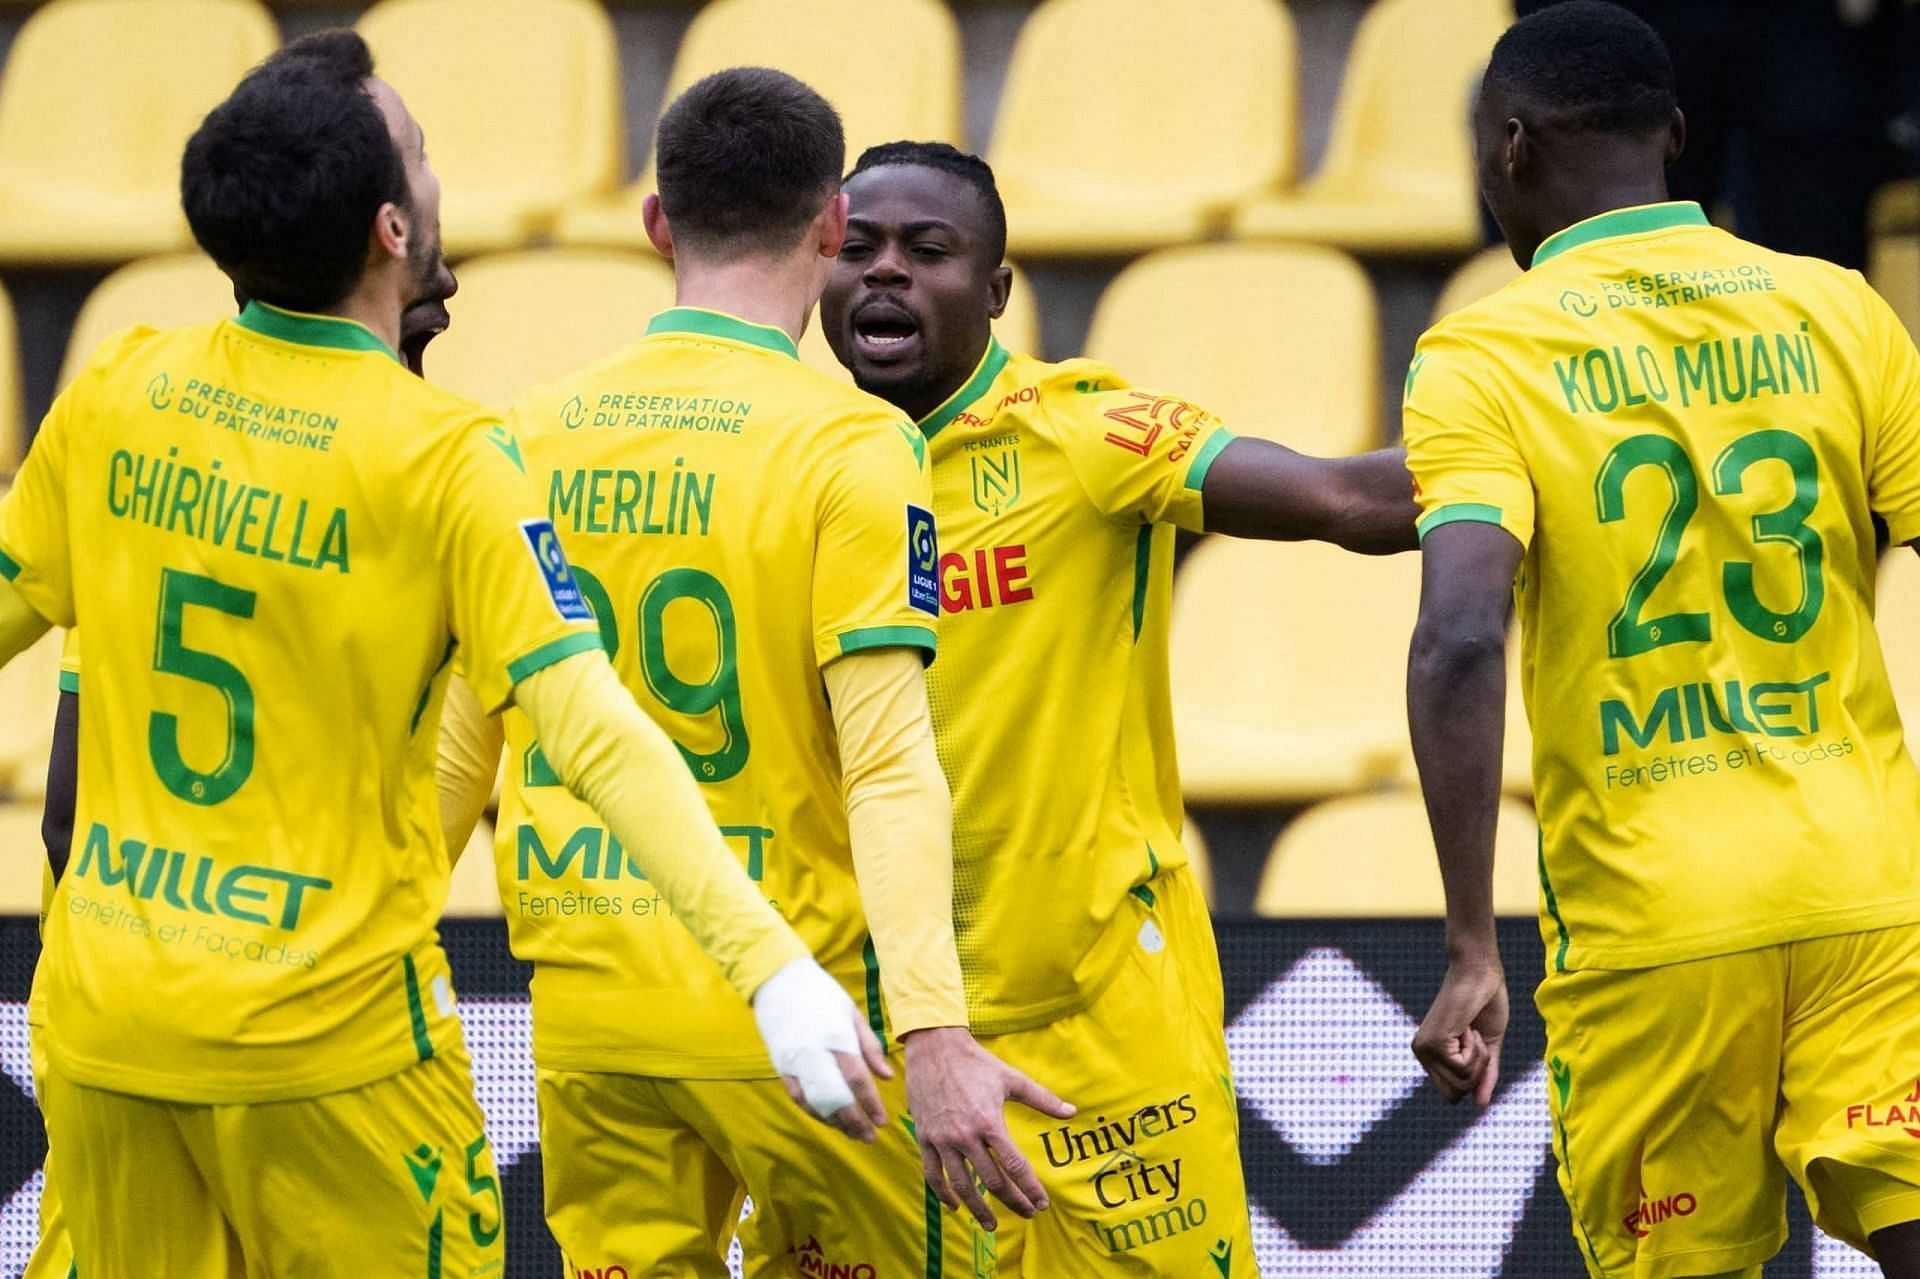 Nantes will host Saint-Etienne on Saturday - Ligue 1.